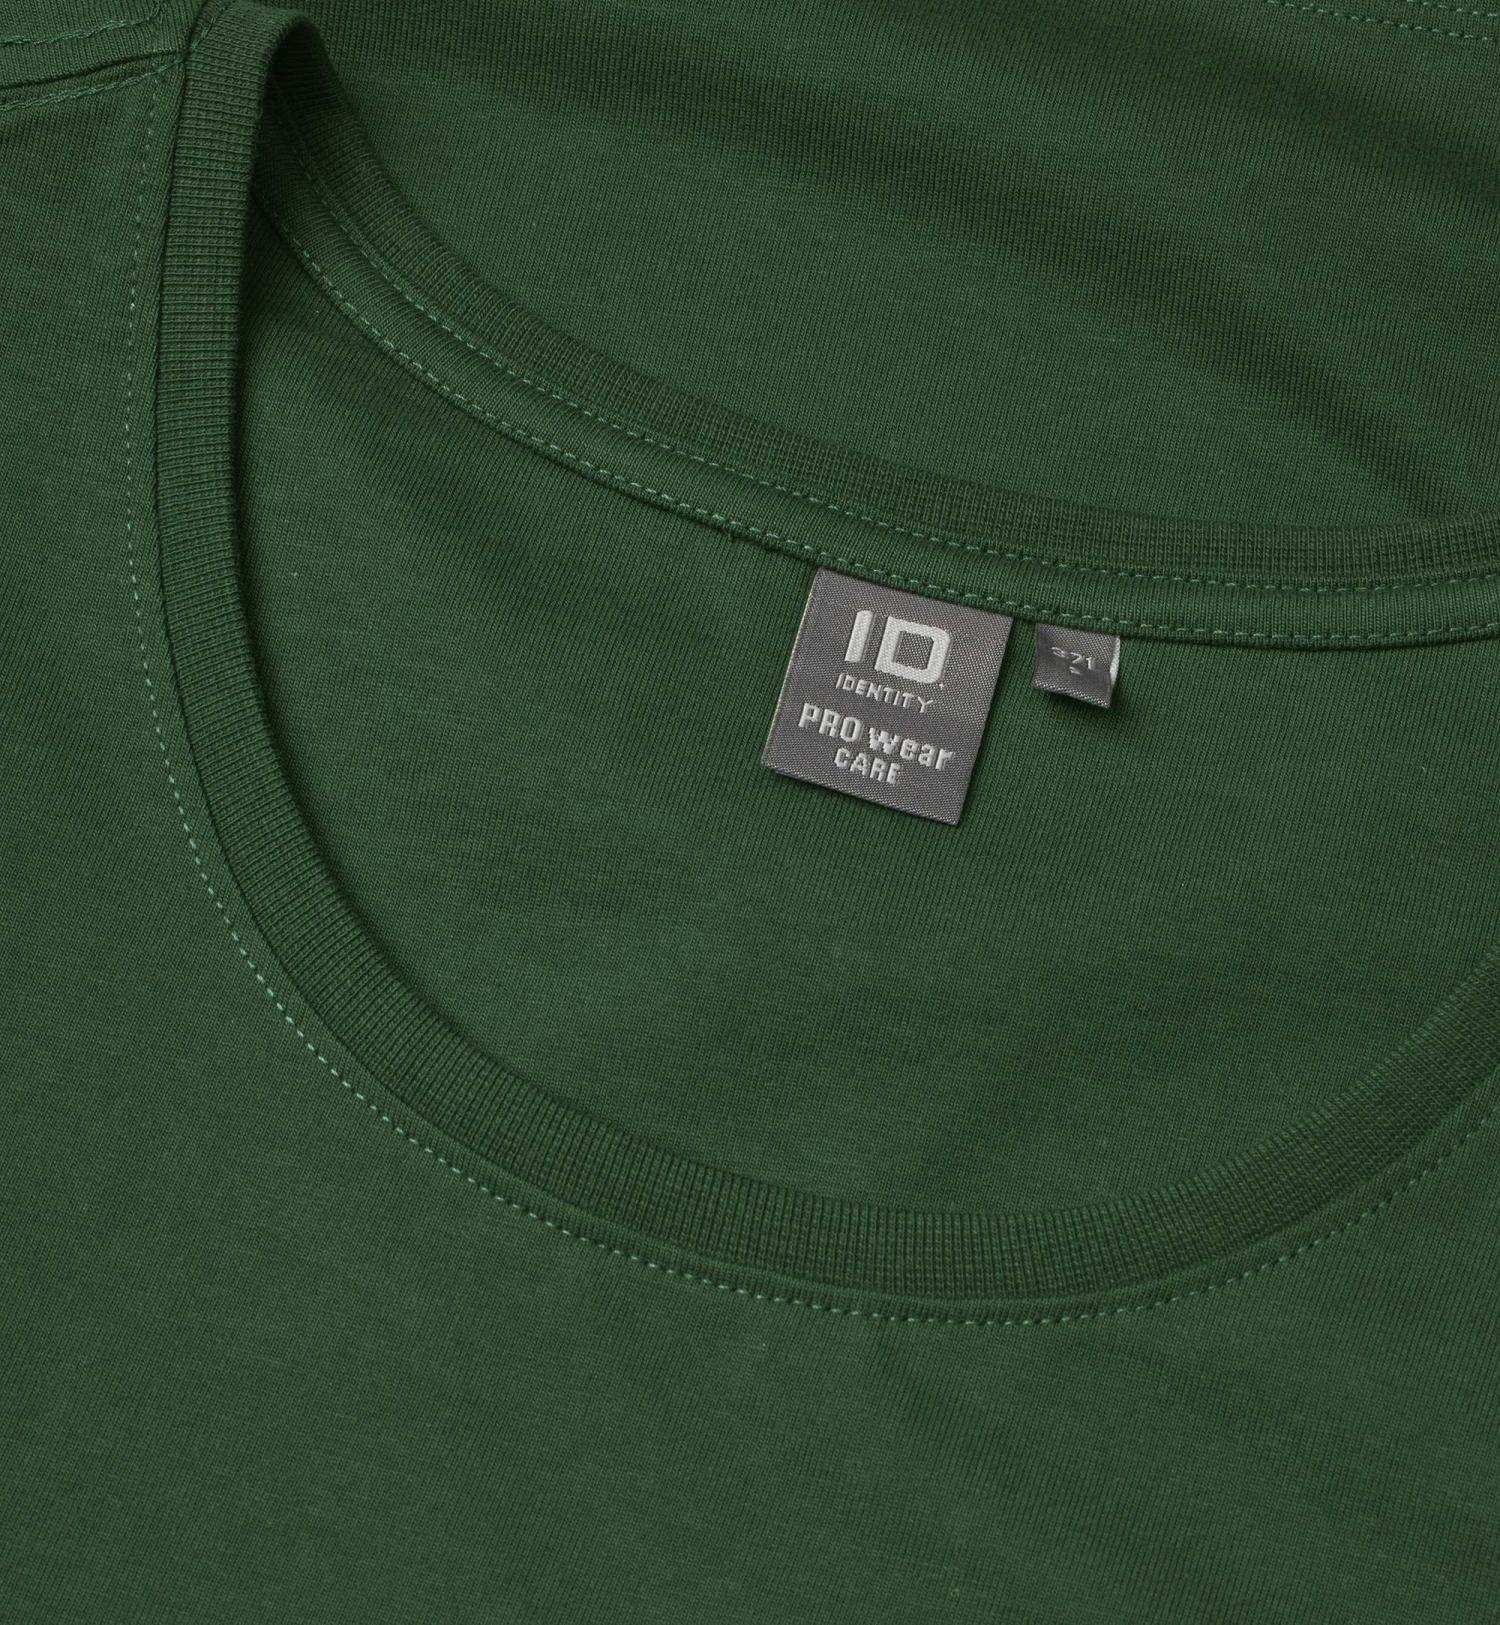 T-shirt PRO Wear CARE | damski 0371-Bottle green